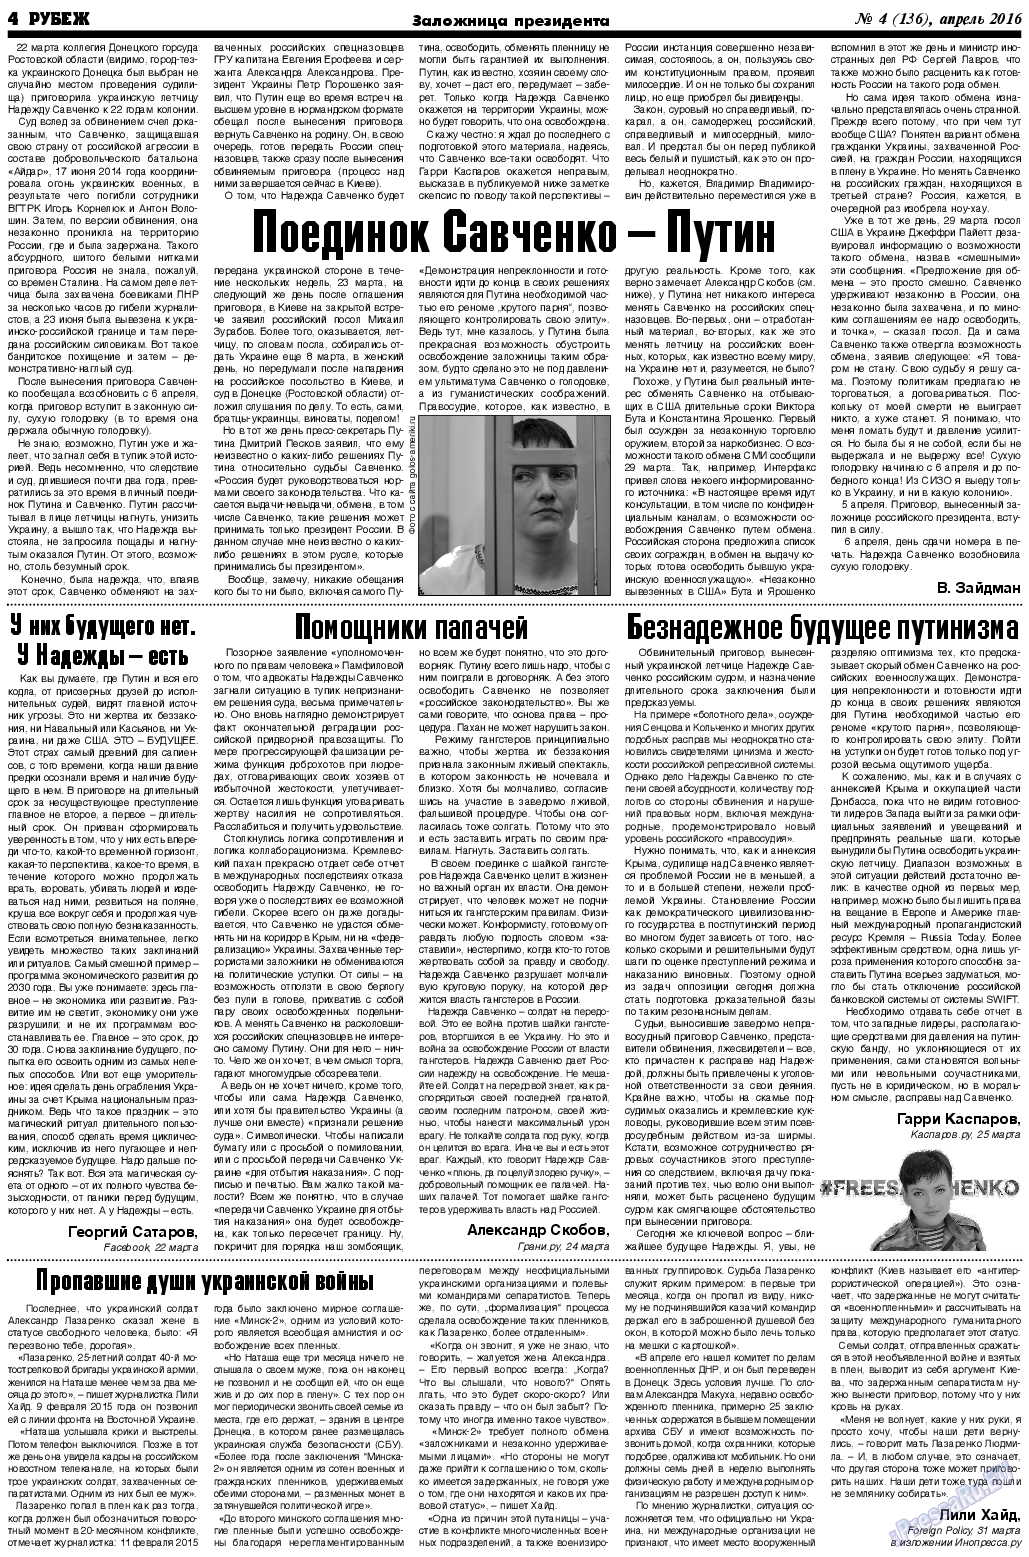 Рубеж, газета. 2016 №4 стр.4